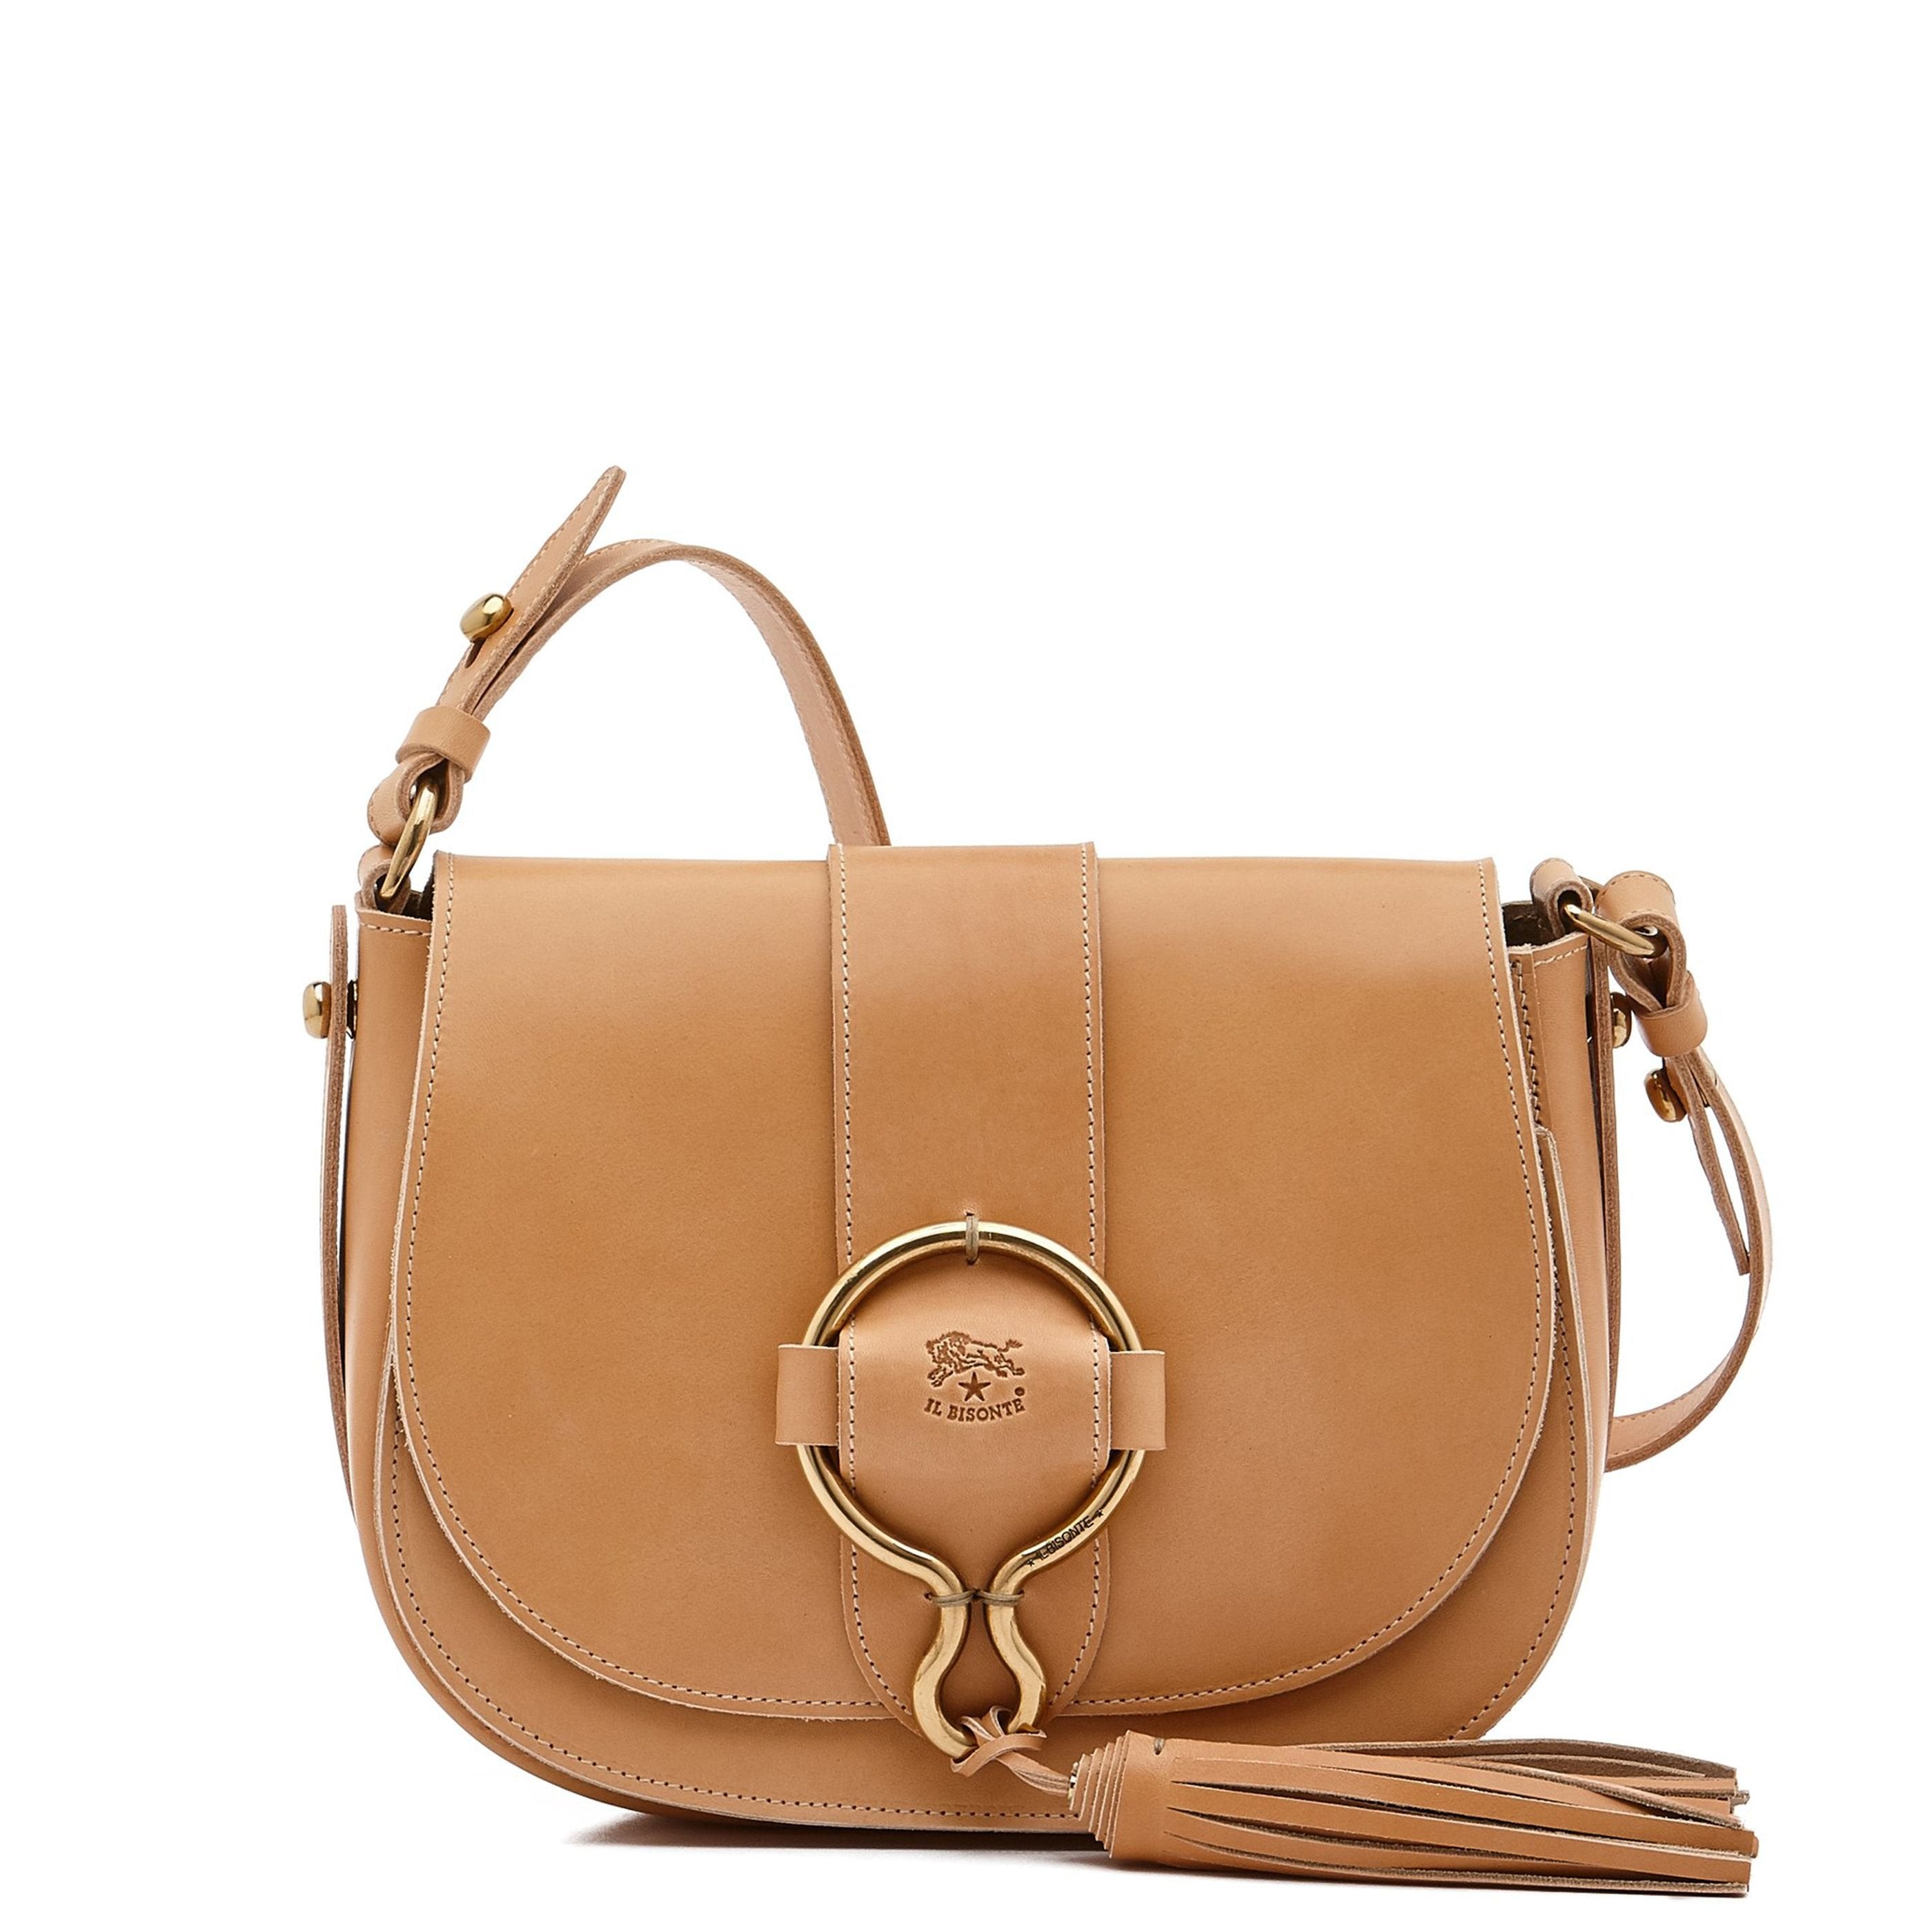 Handbag Tassels - Heritage Leather Tan / Gold